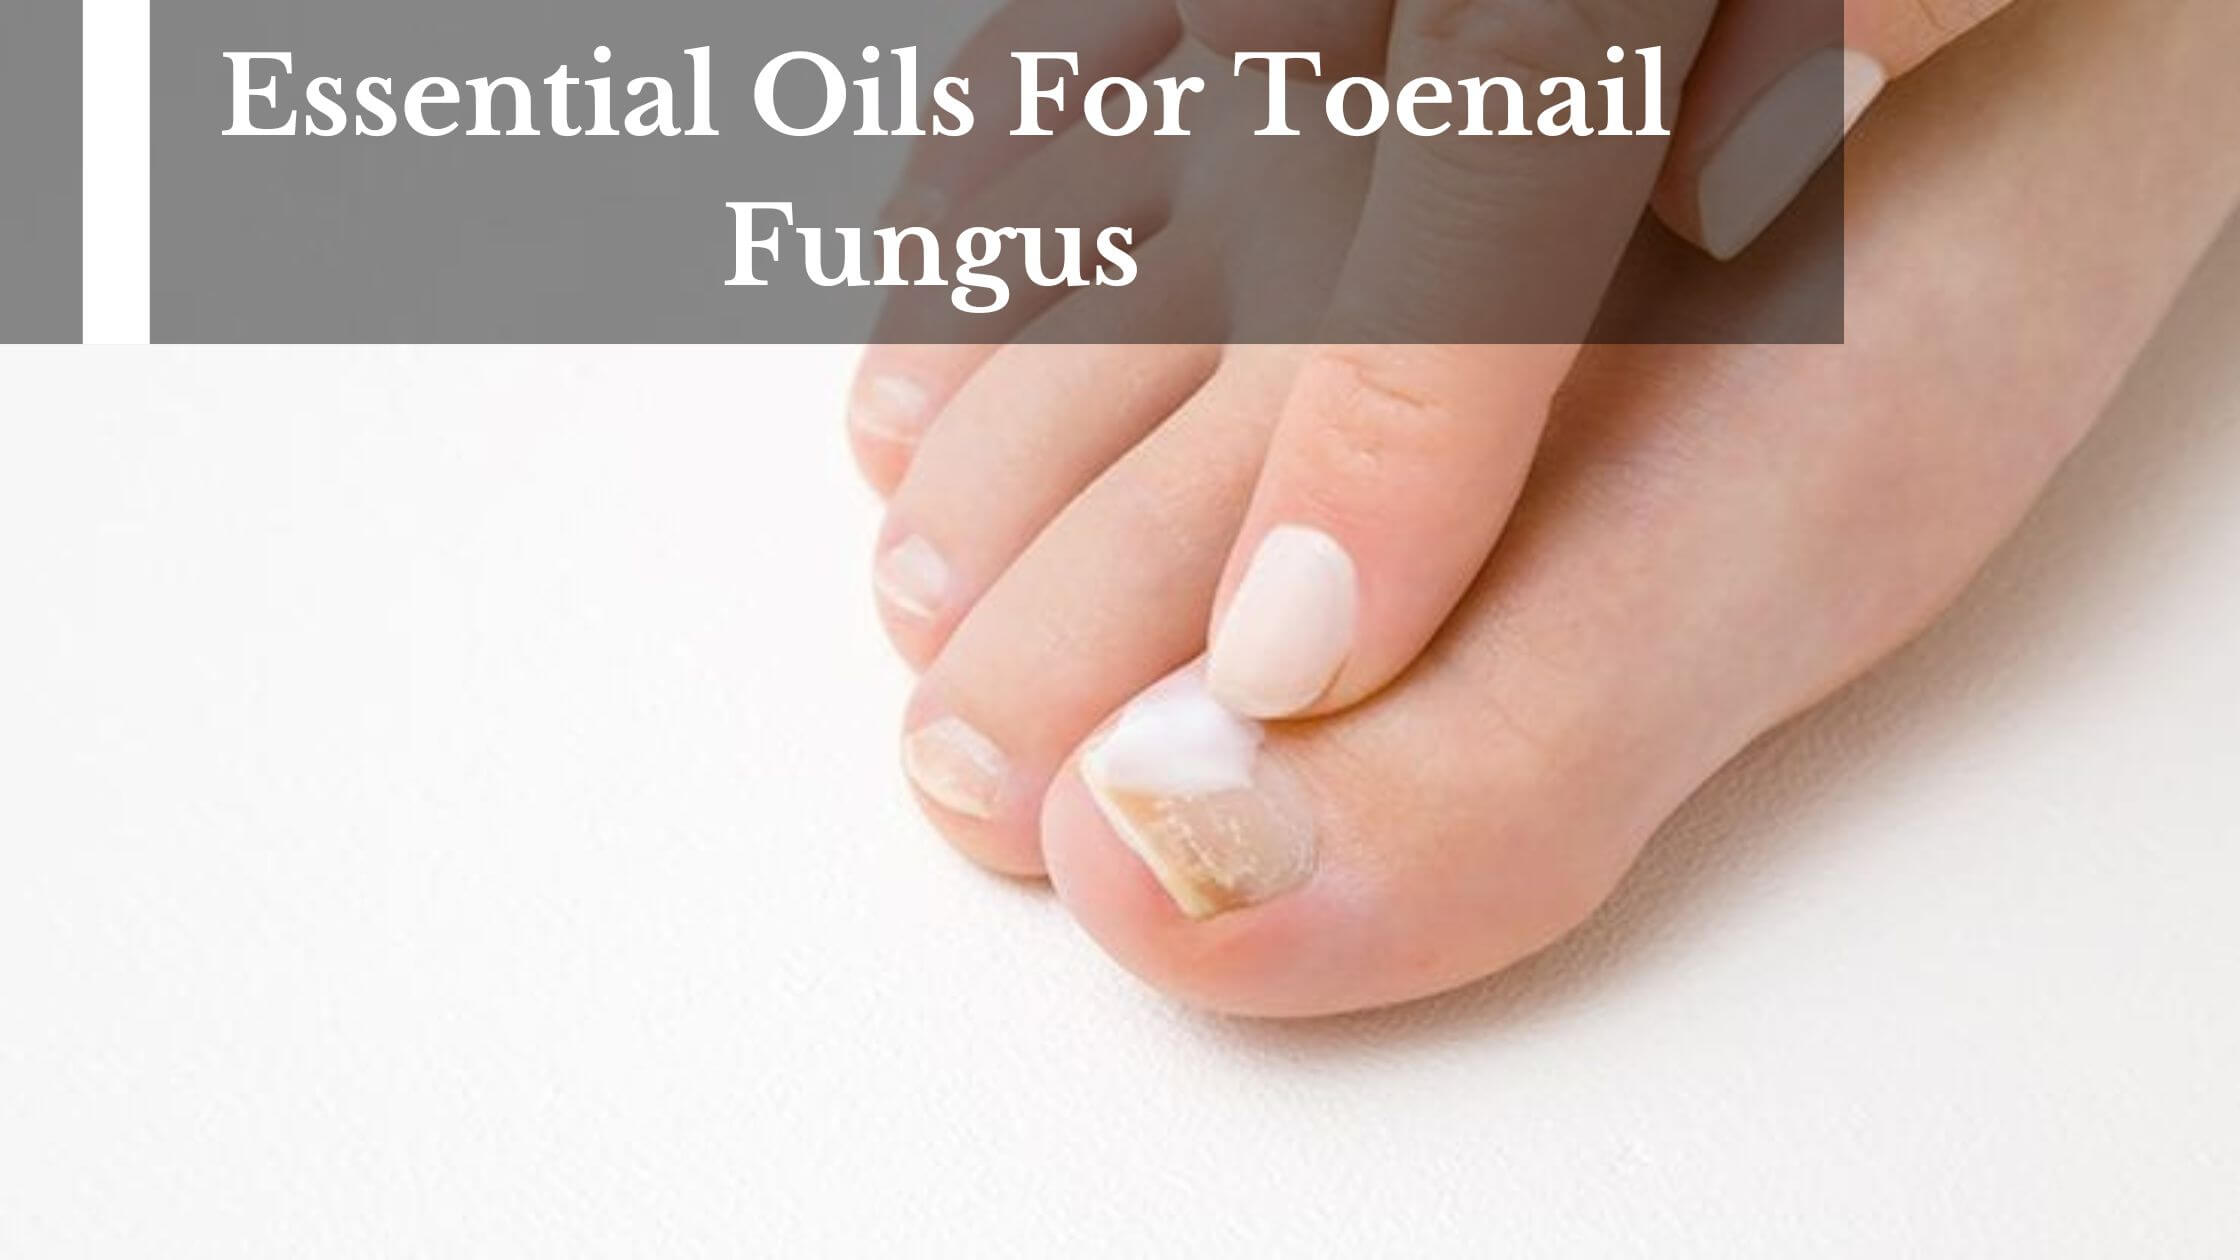 Treat Toenail Fungus With Essential Oils